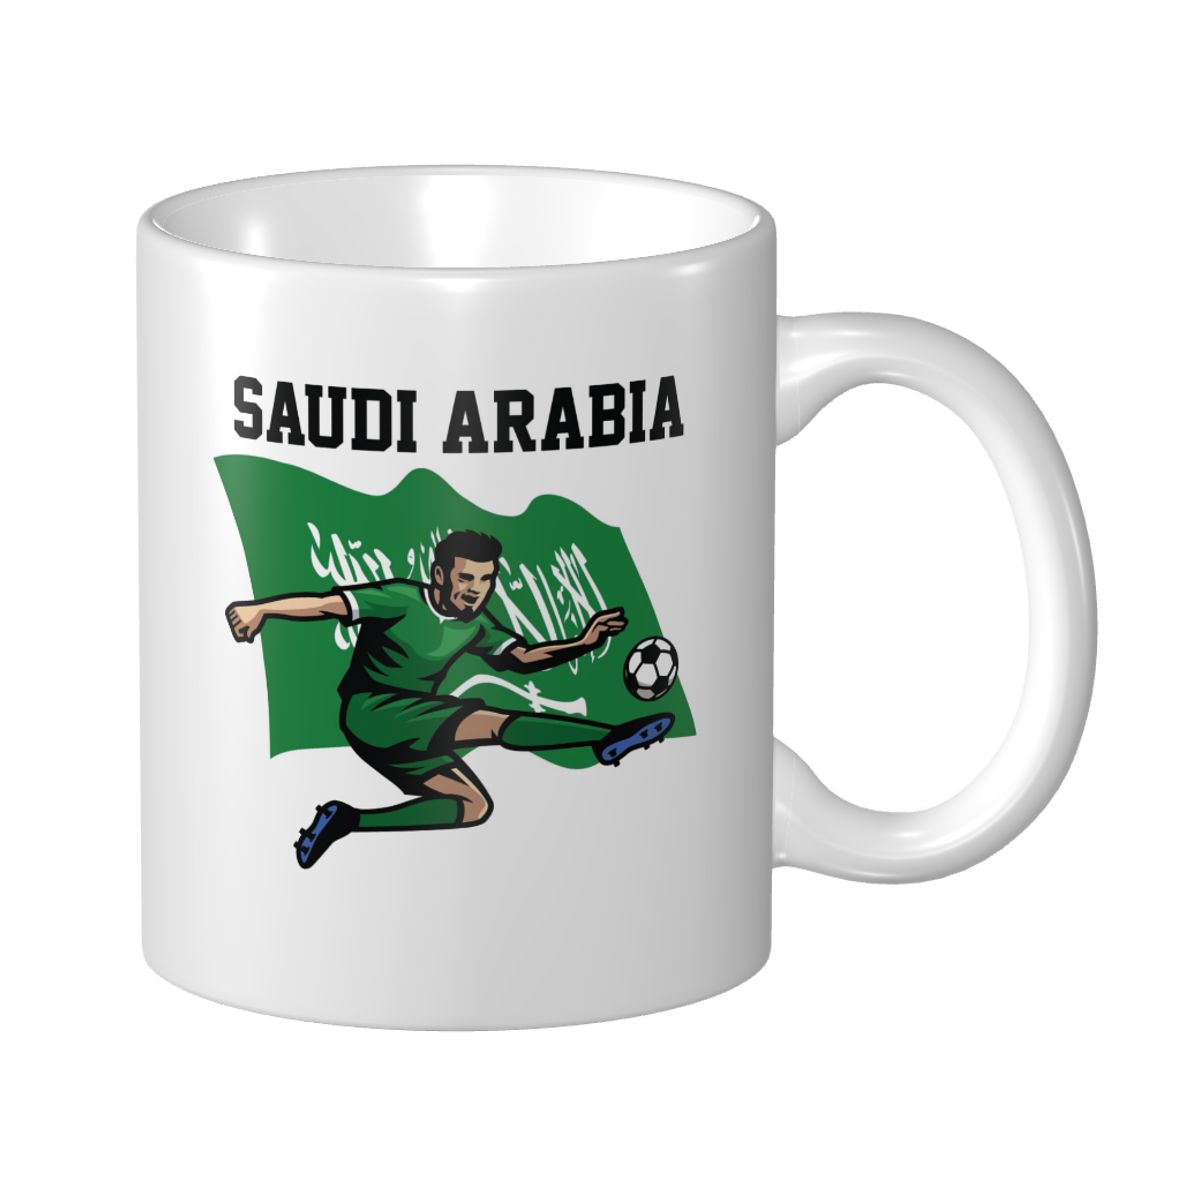 Saudi Arabia Soccer Player Mug